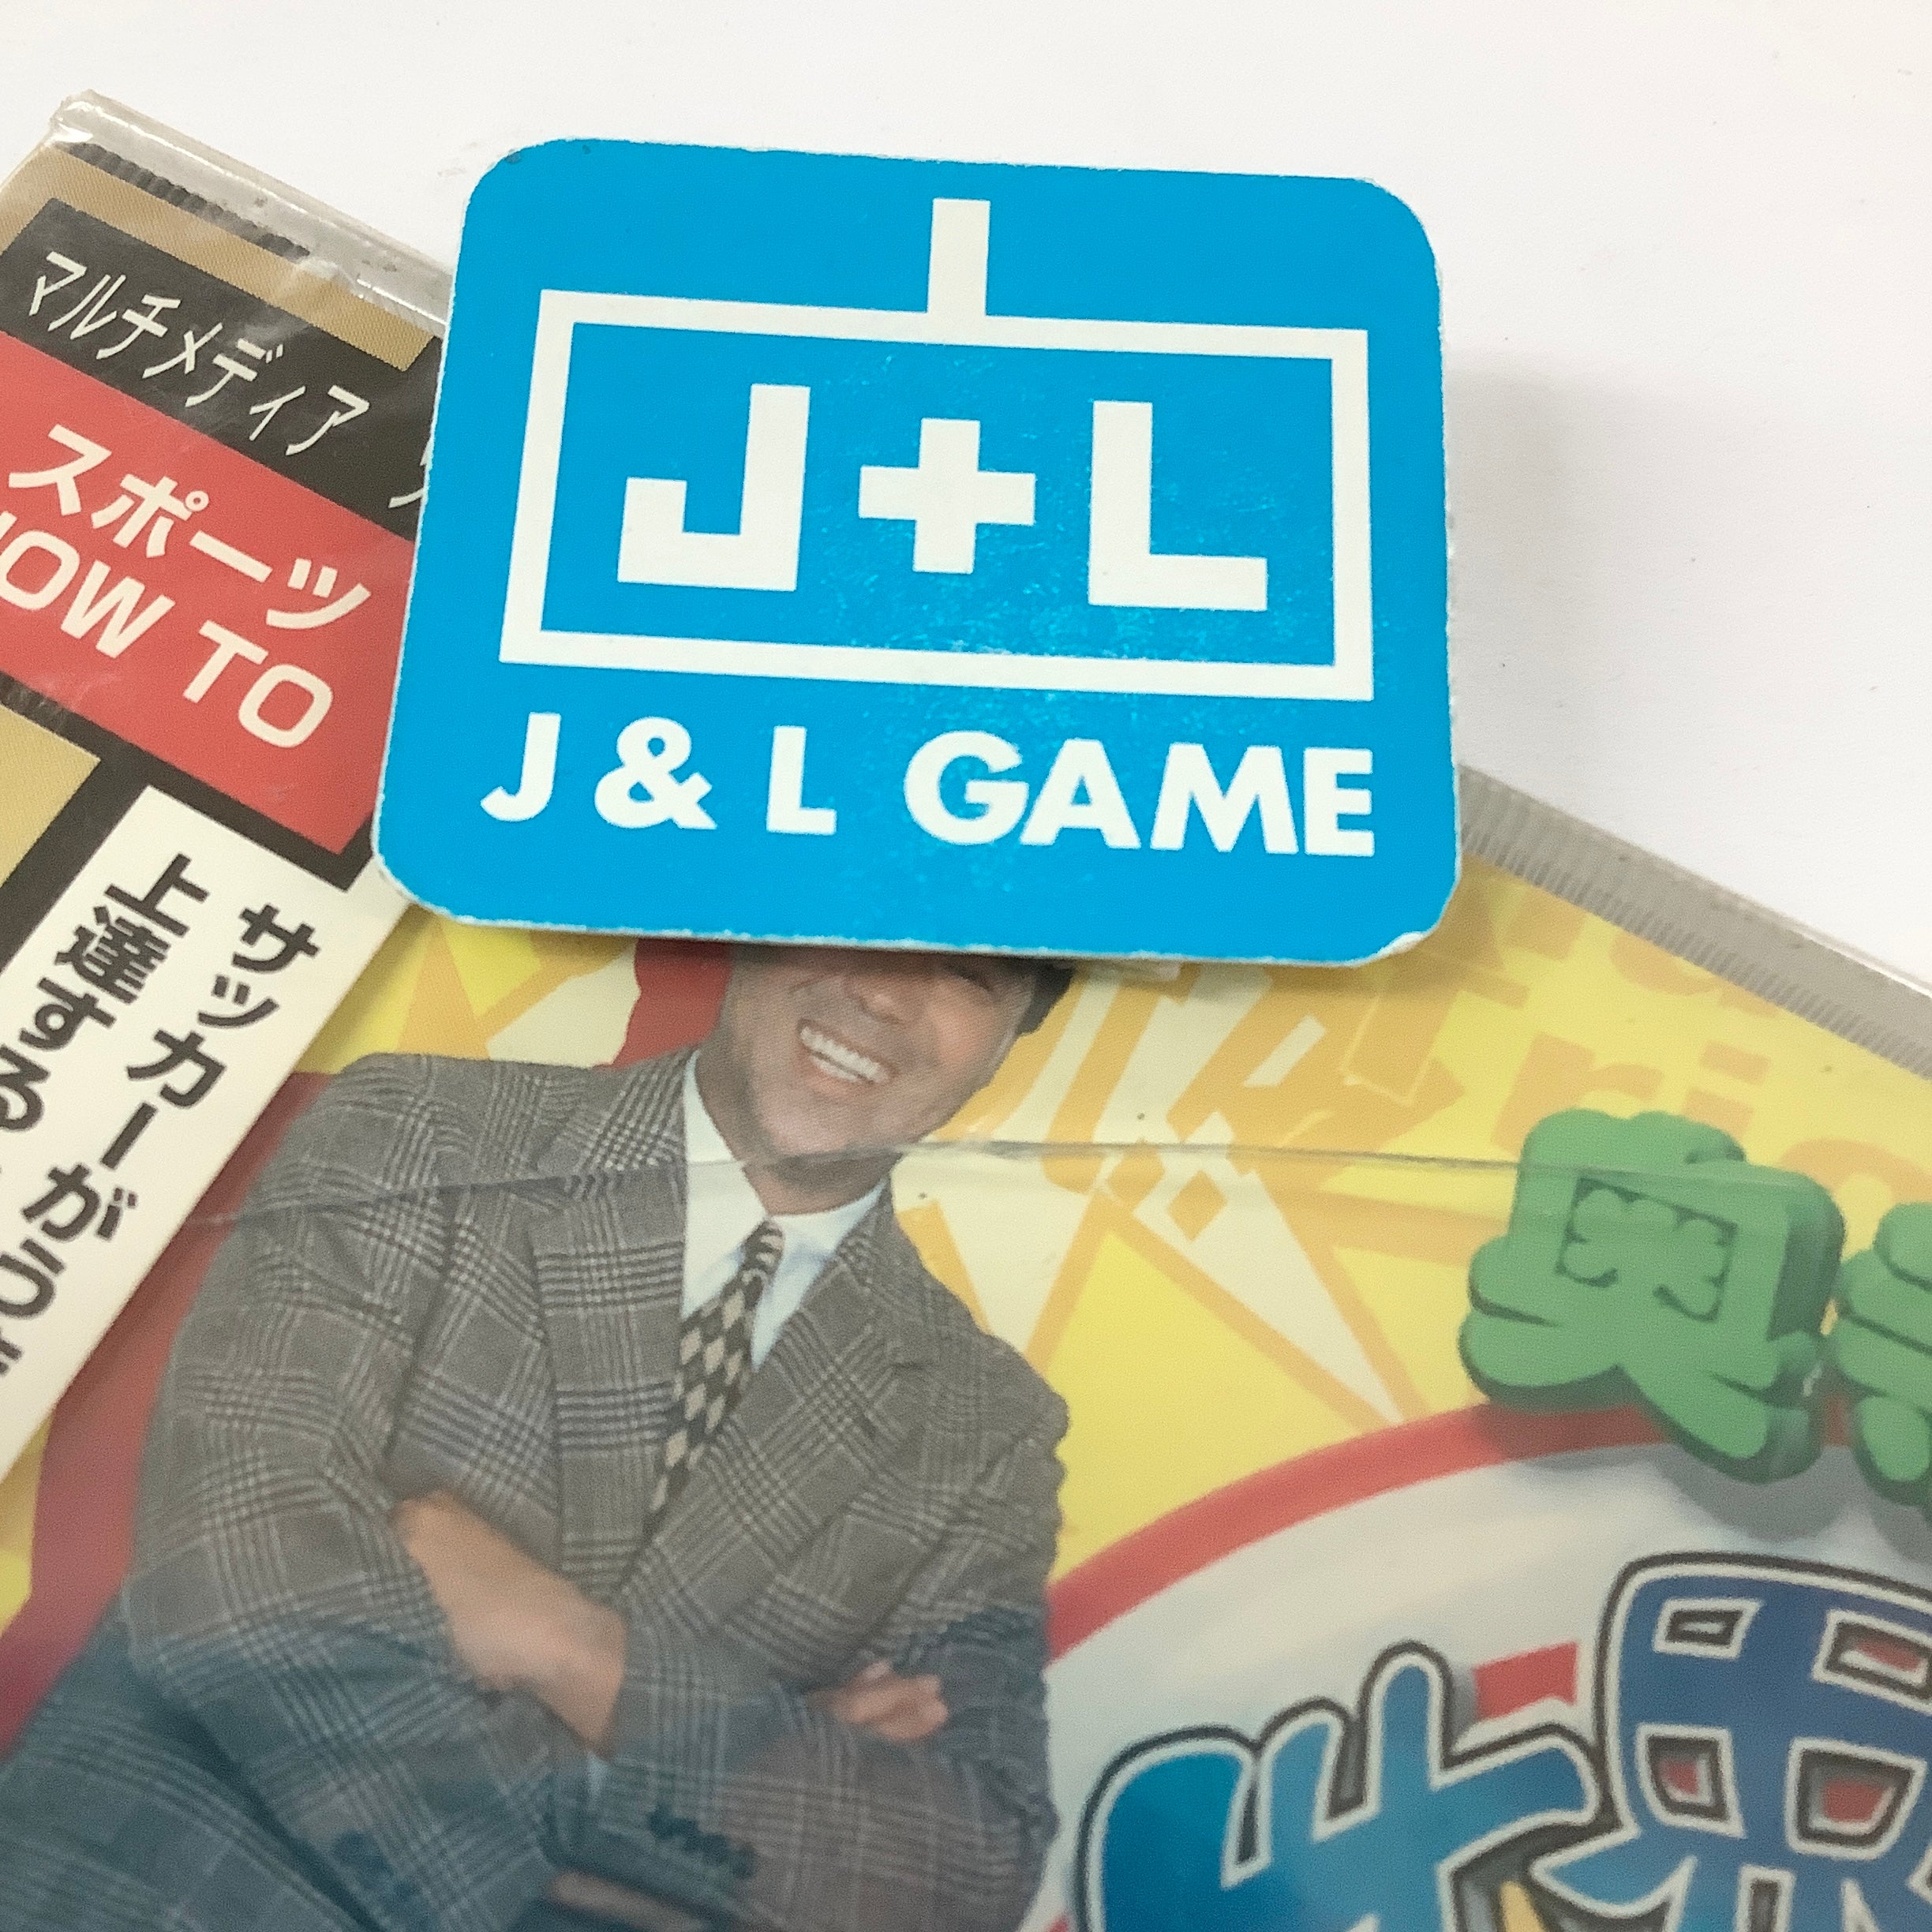 Okudera Yasuhiko no Sekai o Mezase! Soccer Kids - Nyuumon Hen - (SS) SEGA Saturn (Japanese Import) Video Games Fujitsu   